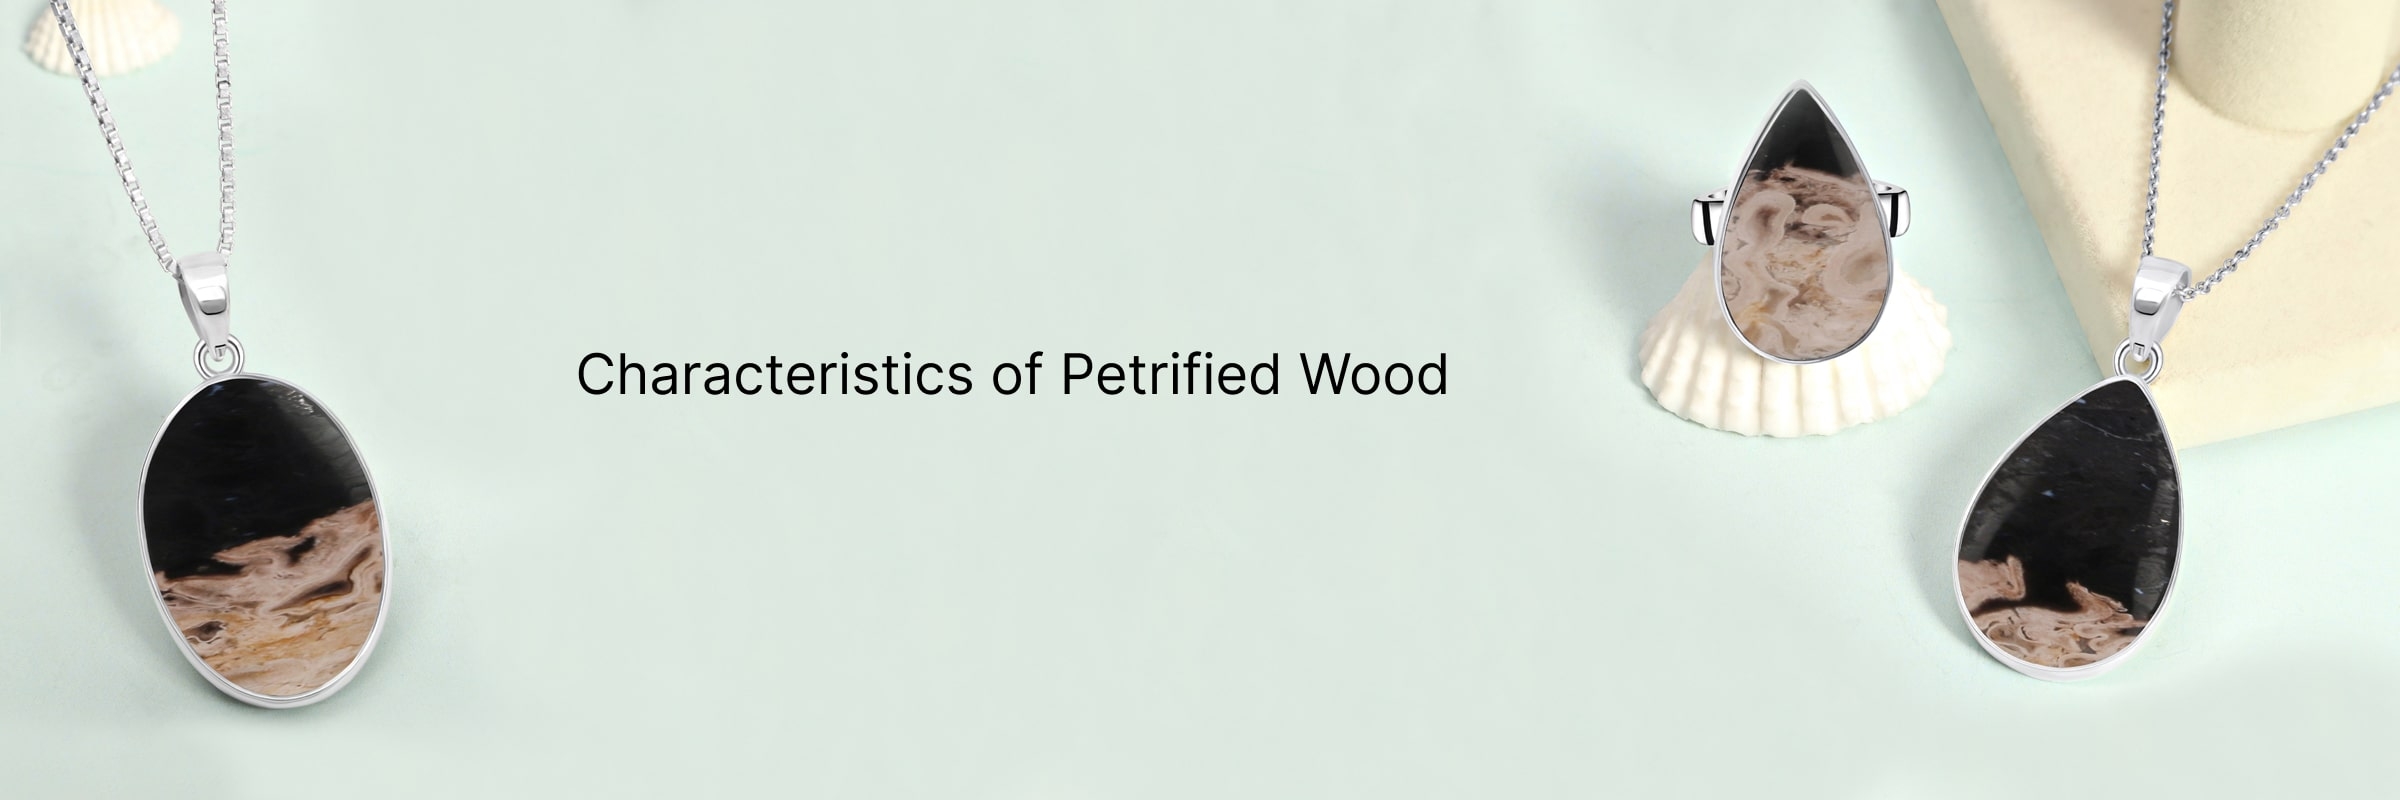 Petrified Wood Characteristics